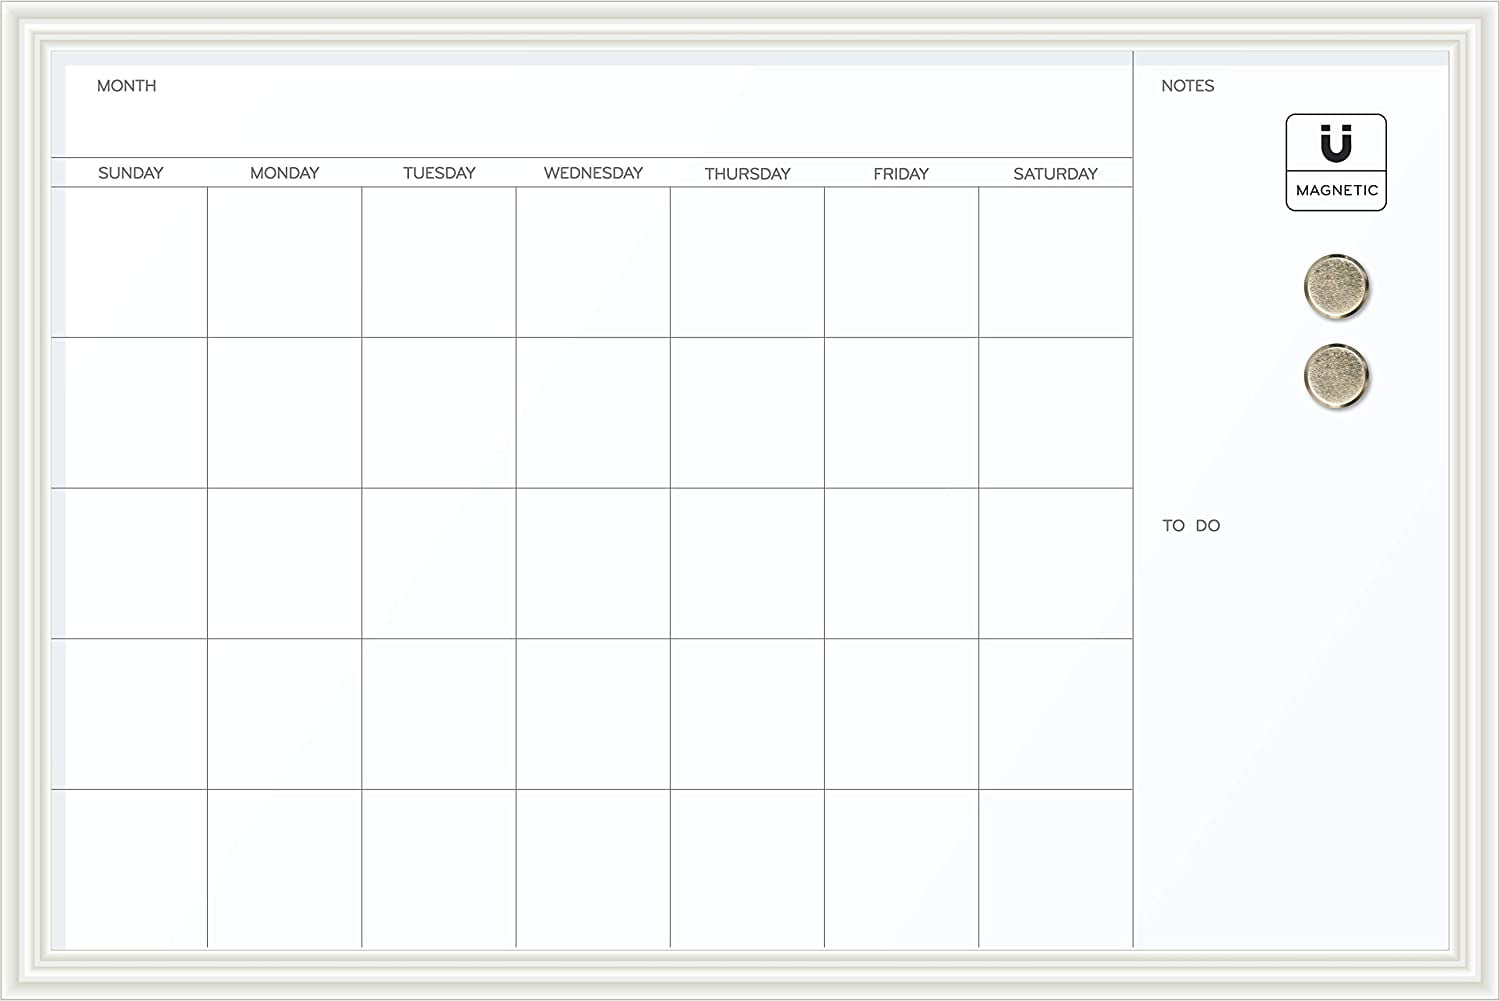 12 x 16-Inch Smart Planner Magnetic Dry Erase Board Monthly Calendar Planner